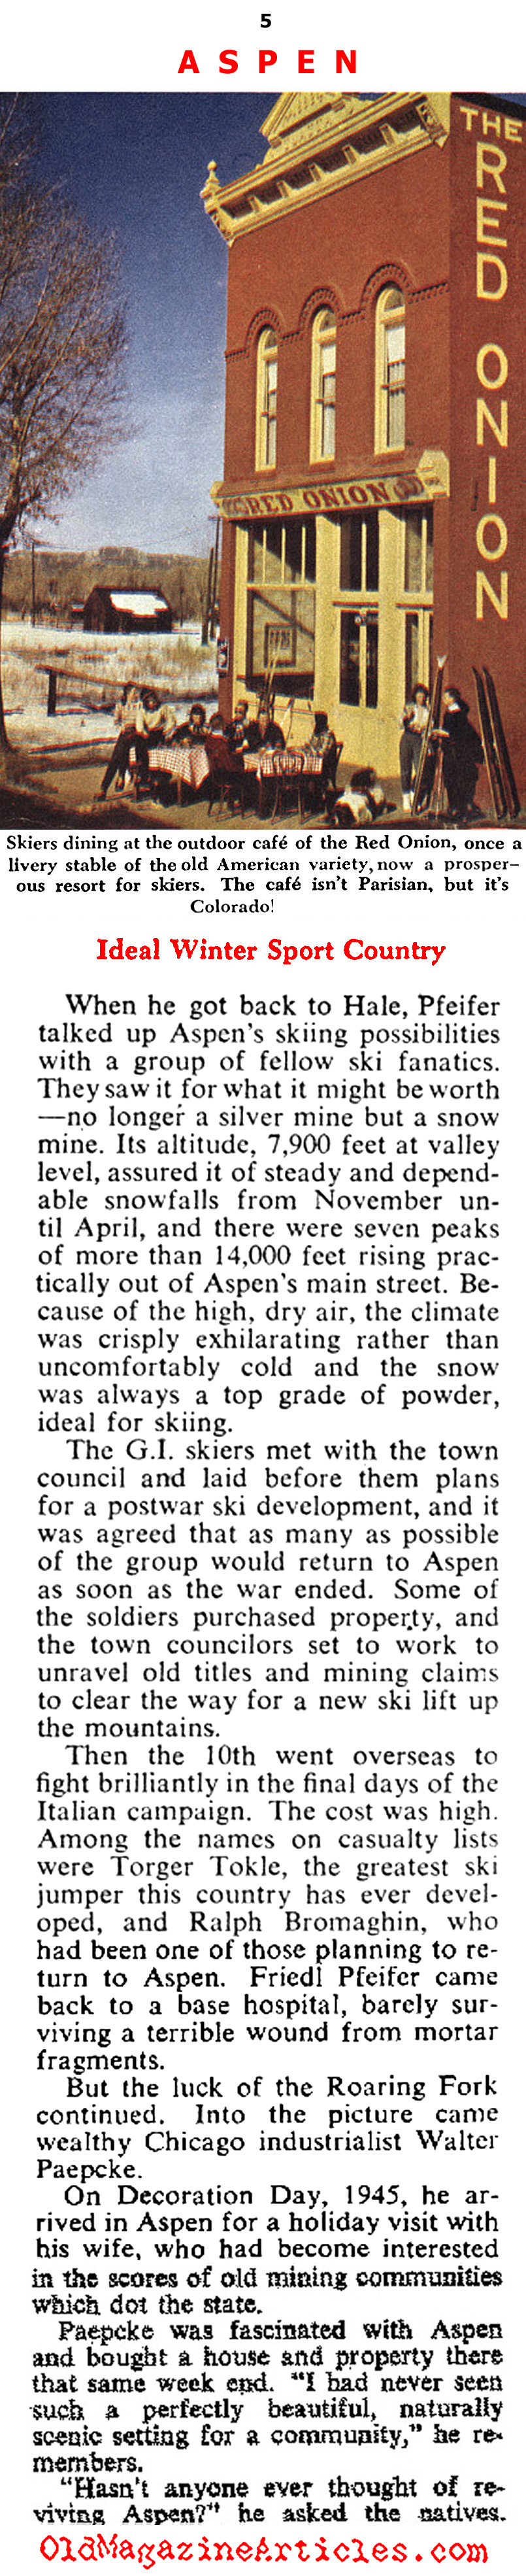 Skiiers Discover Aspen (Collier's Magazine, 1948)